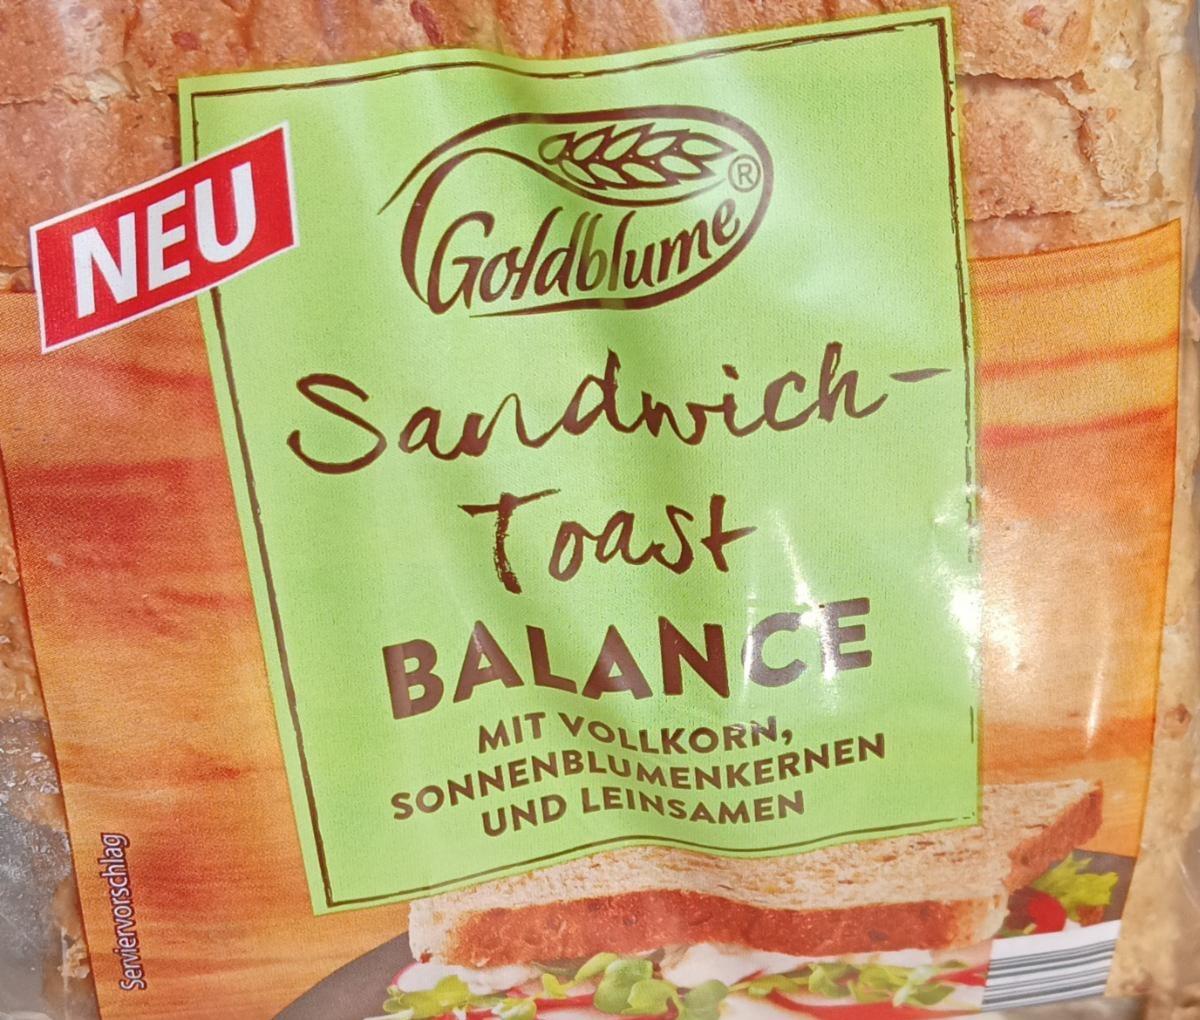 Fotografie - Sandwich toast balance Goldblume